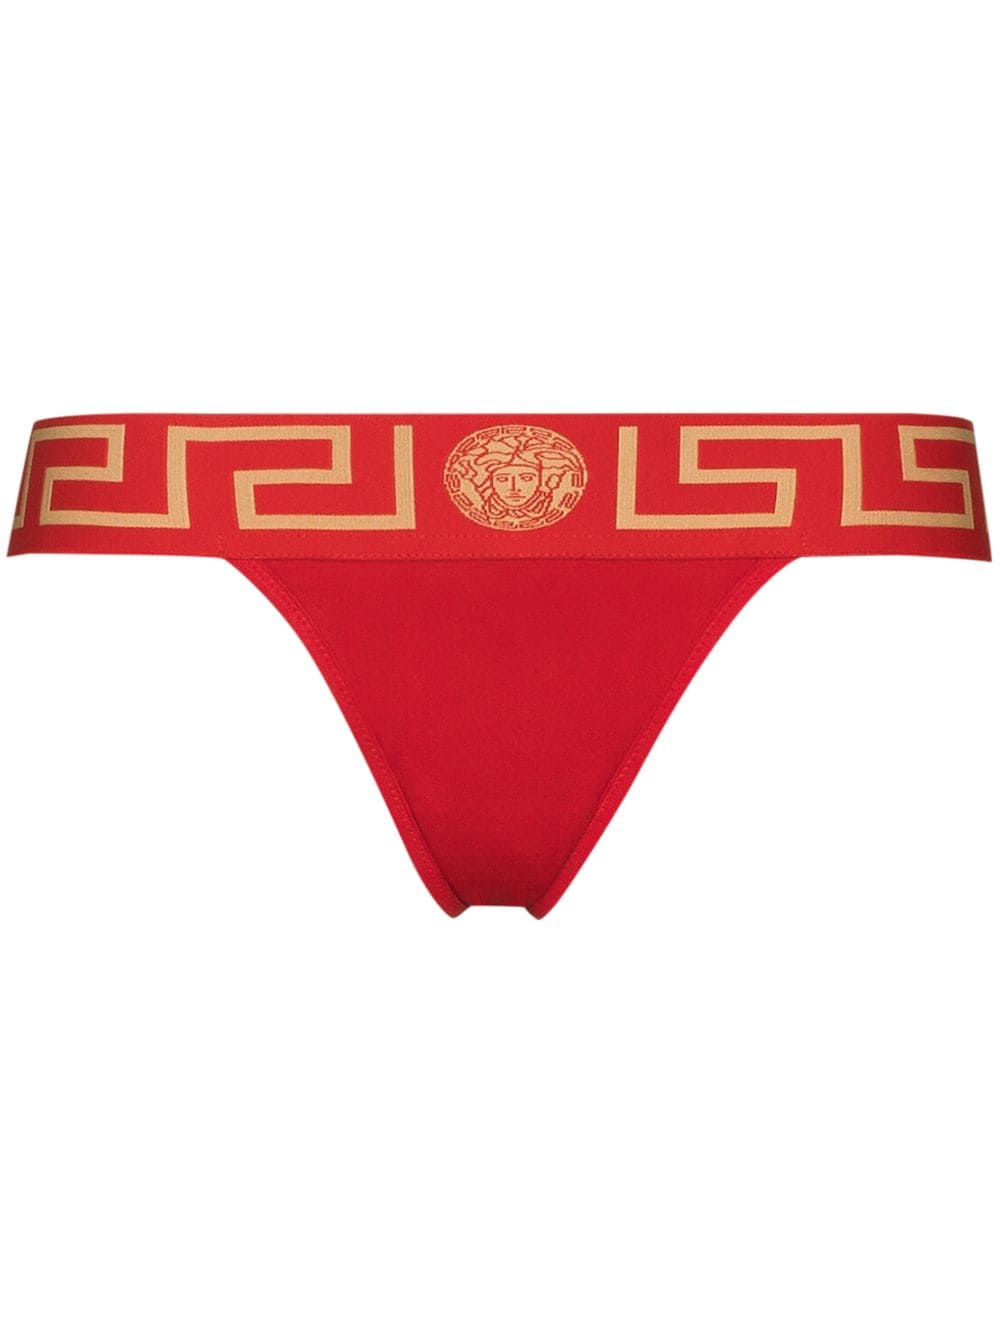 Versace Red Greek Key Thong